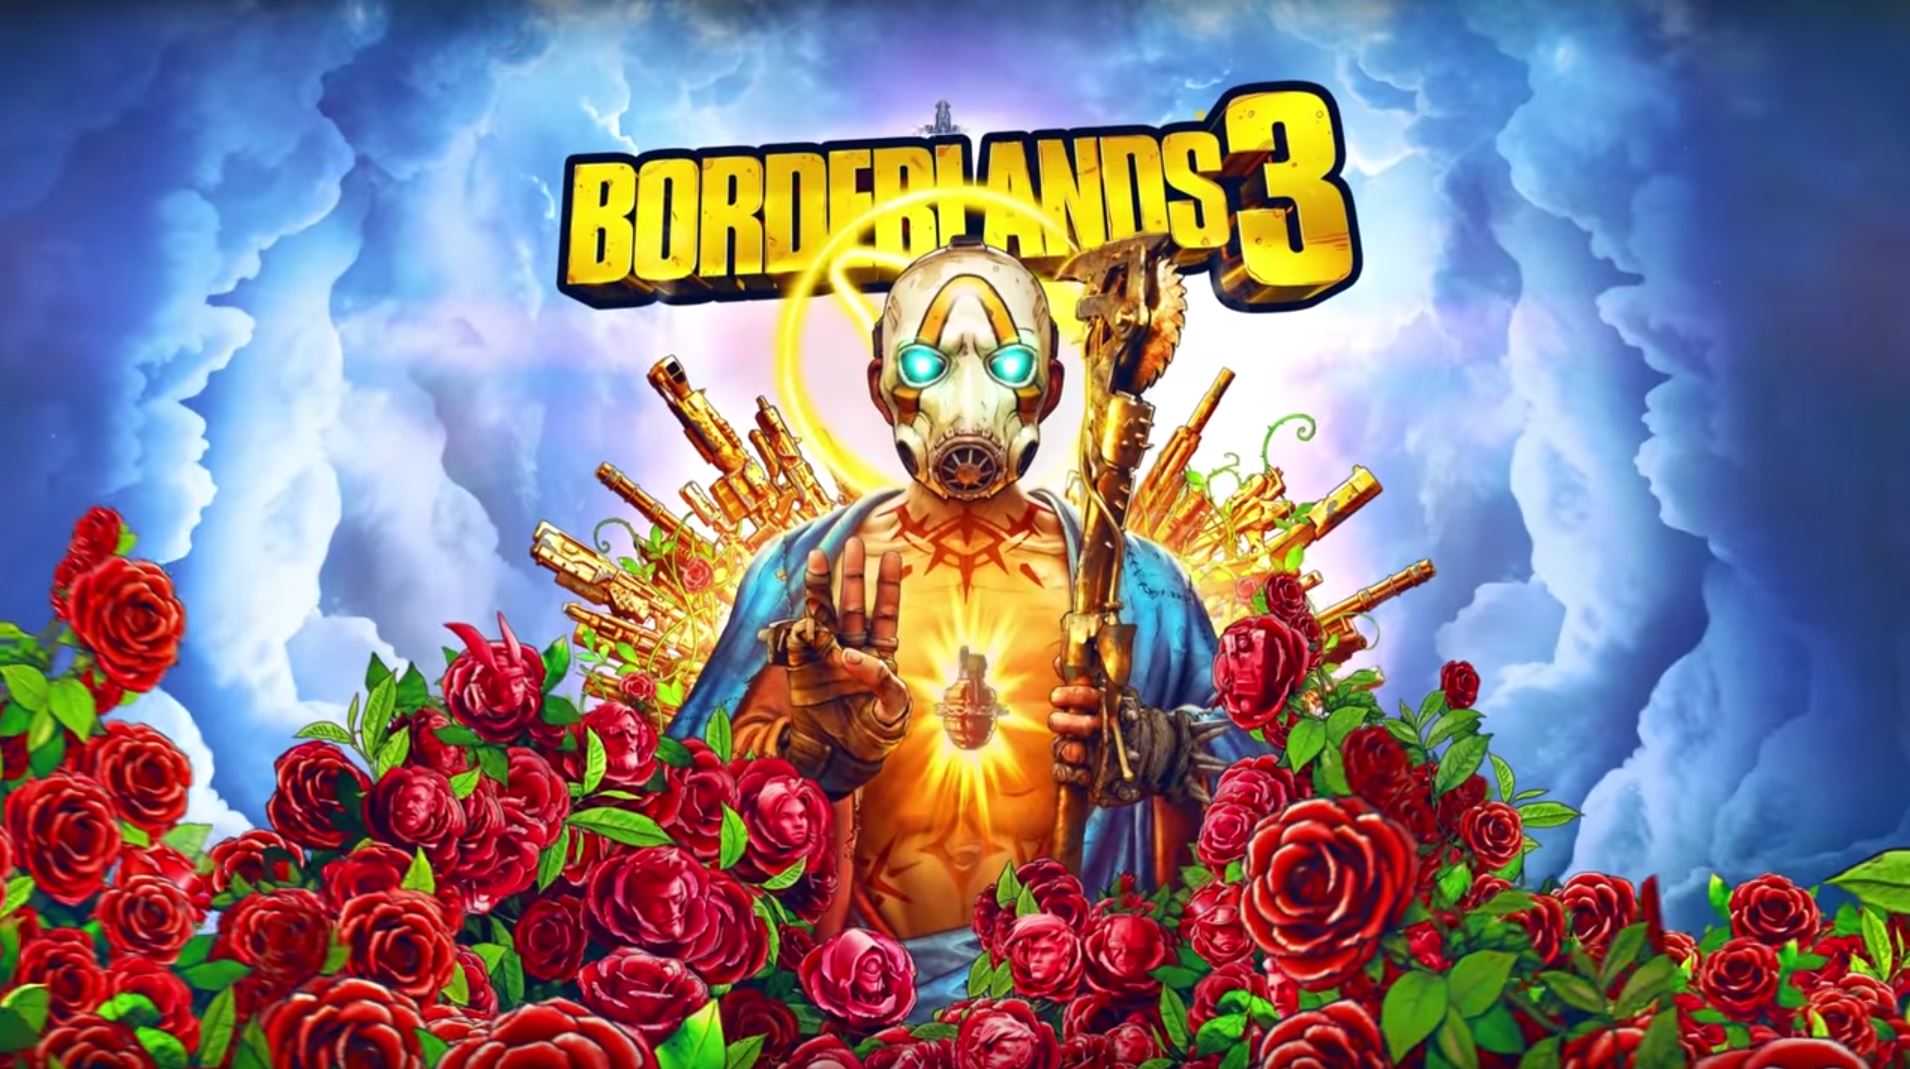 Borderlands 3 launches September 13